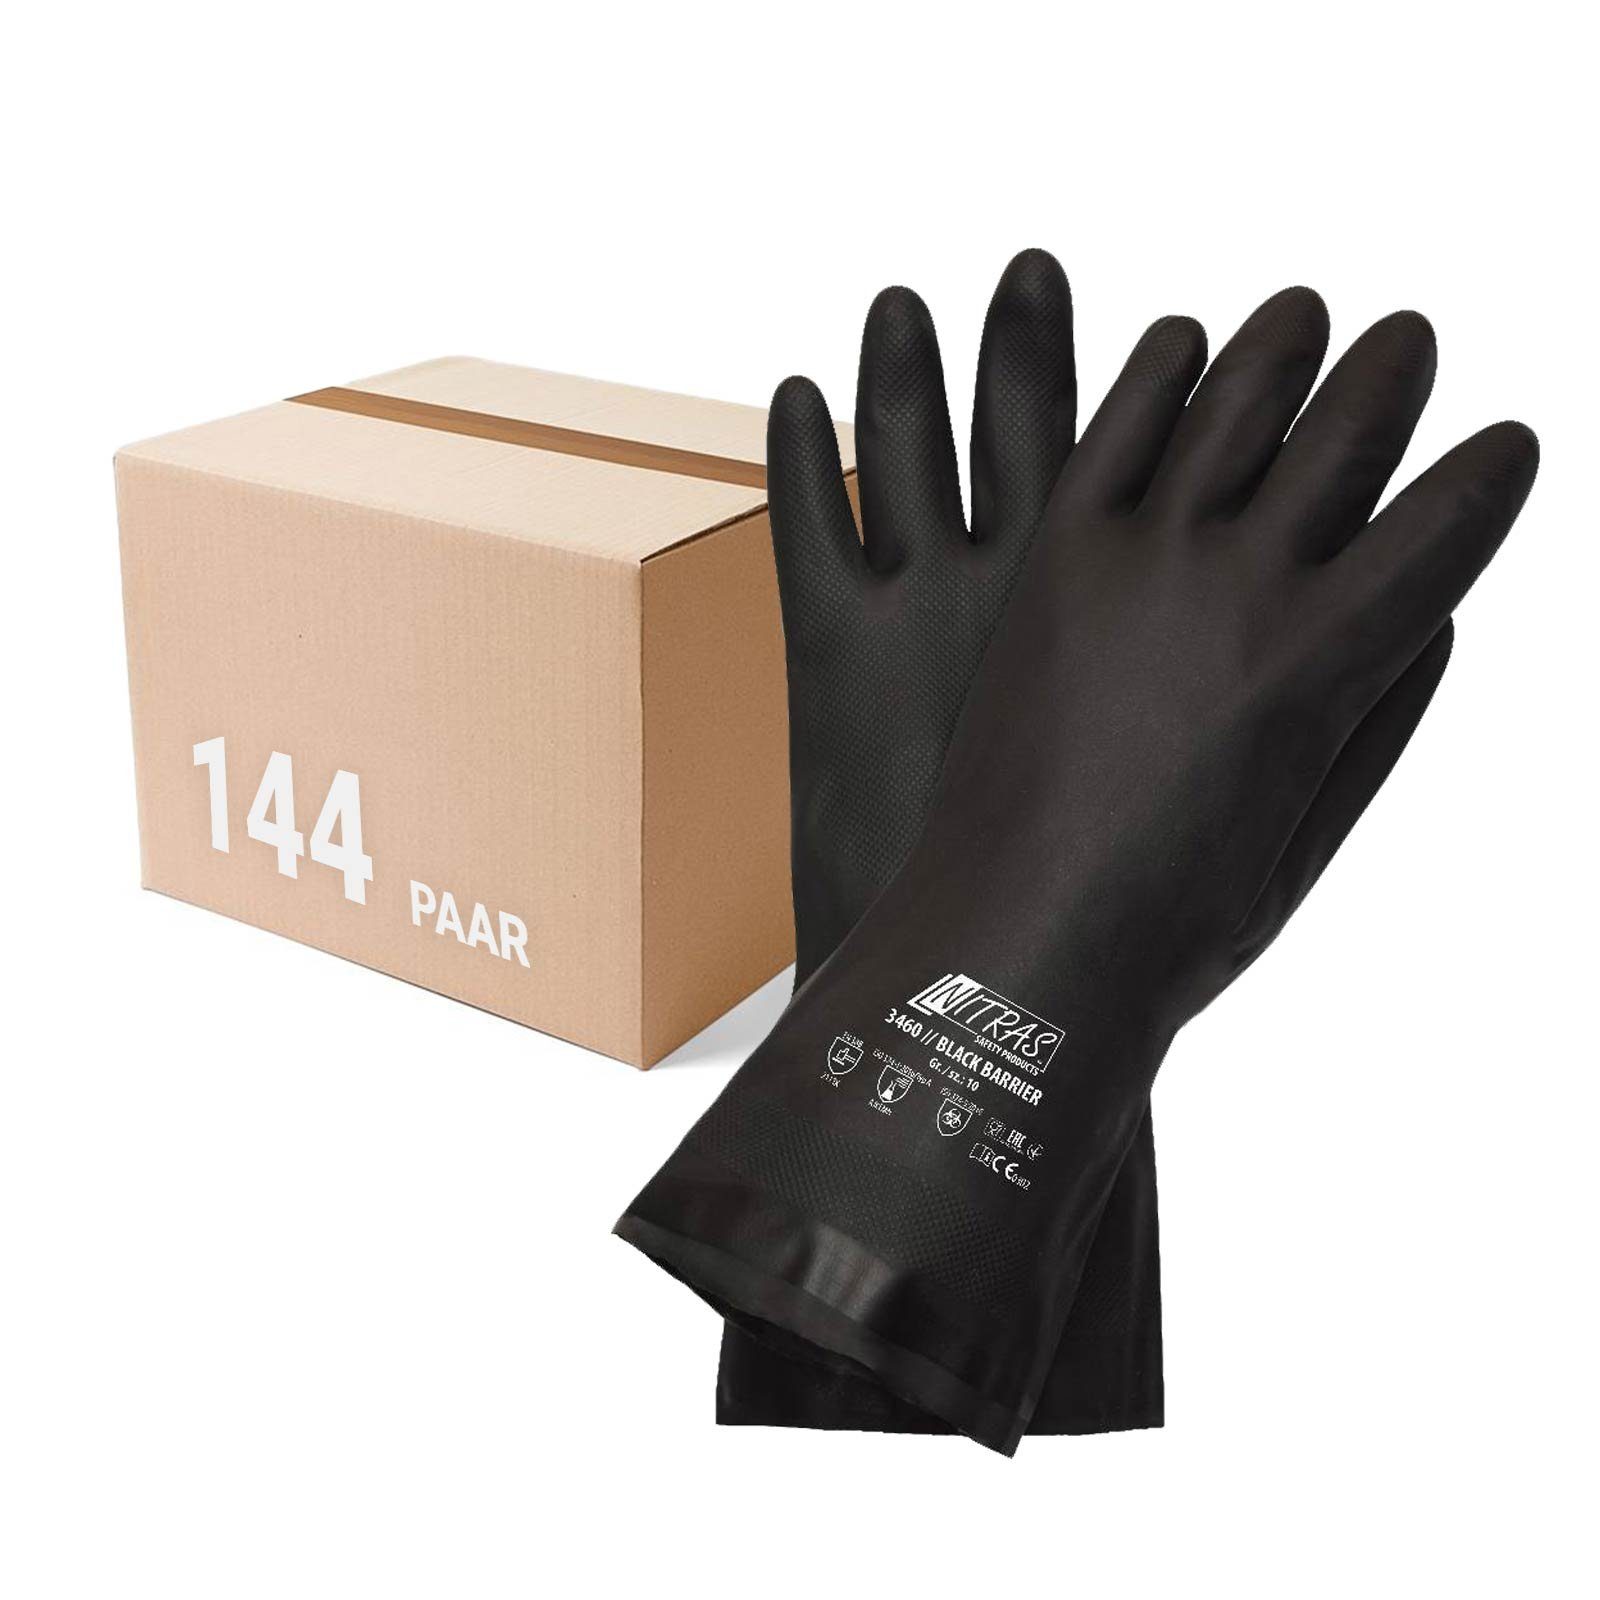 Nitras Putzhandschuh NITRAS Chloroprene-Handschuhe 3460 Black Barrier velourisiert 144 Paar (Set)